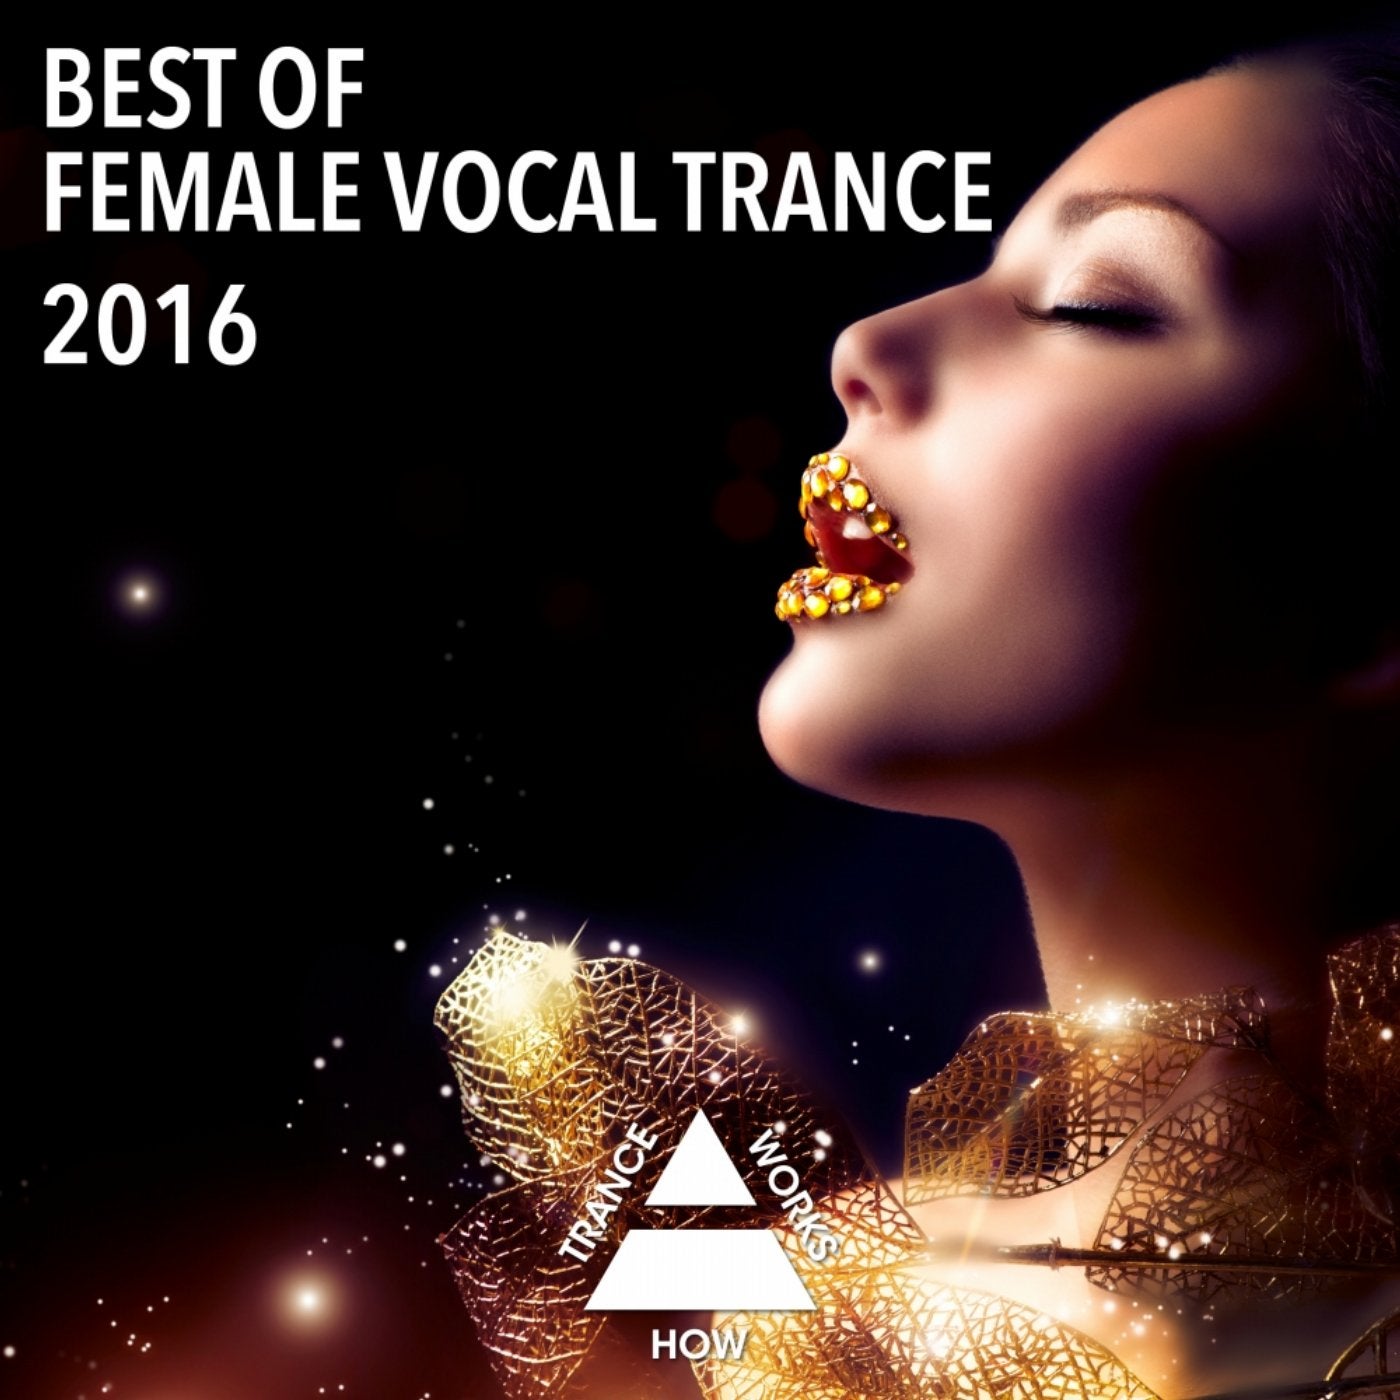 Best Of Female Vocal Trance 2016 от SirAdrianMusic Bundles на Beatport.